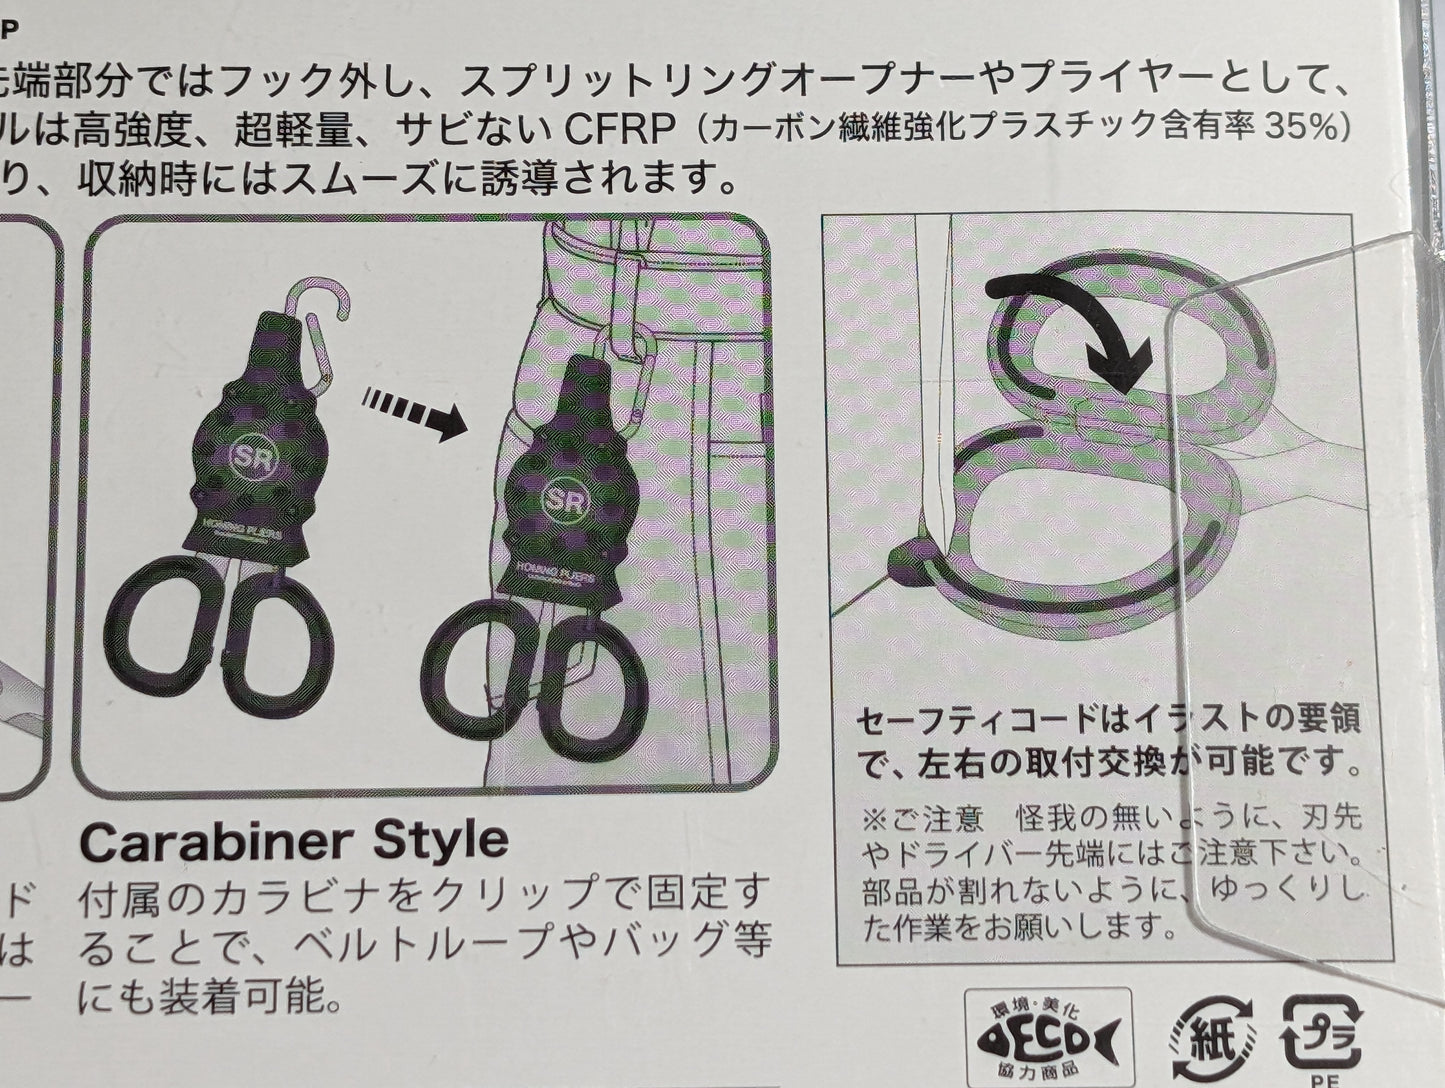 Split Ring Pliers | Daiichiseiko - Homing plier type SR